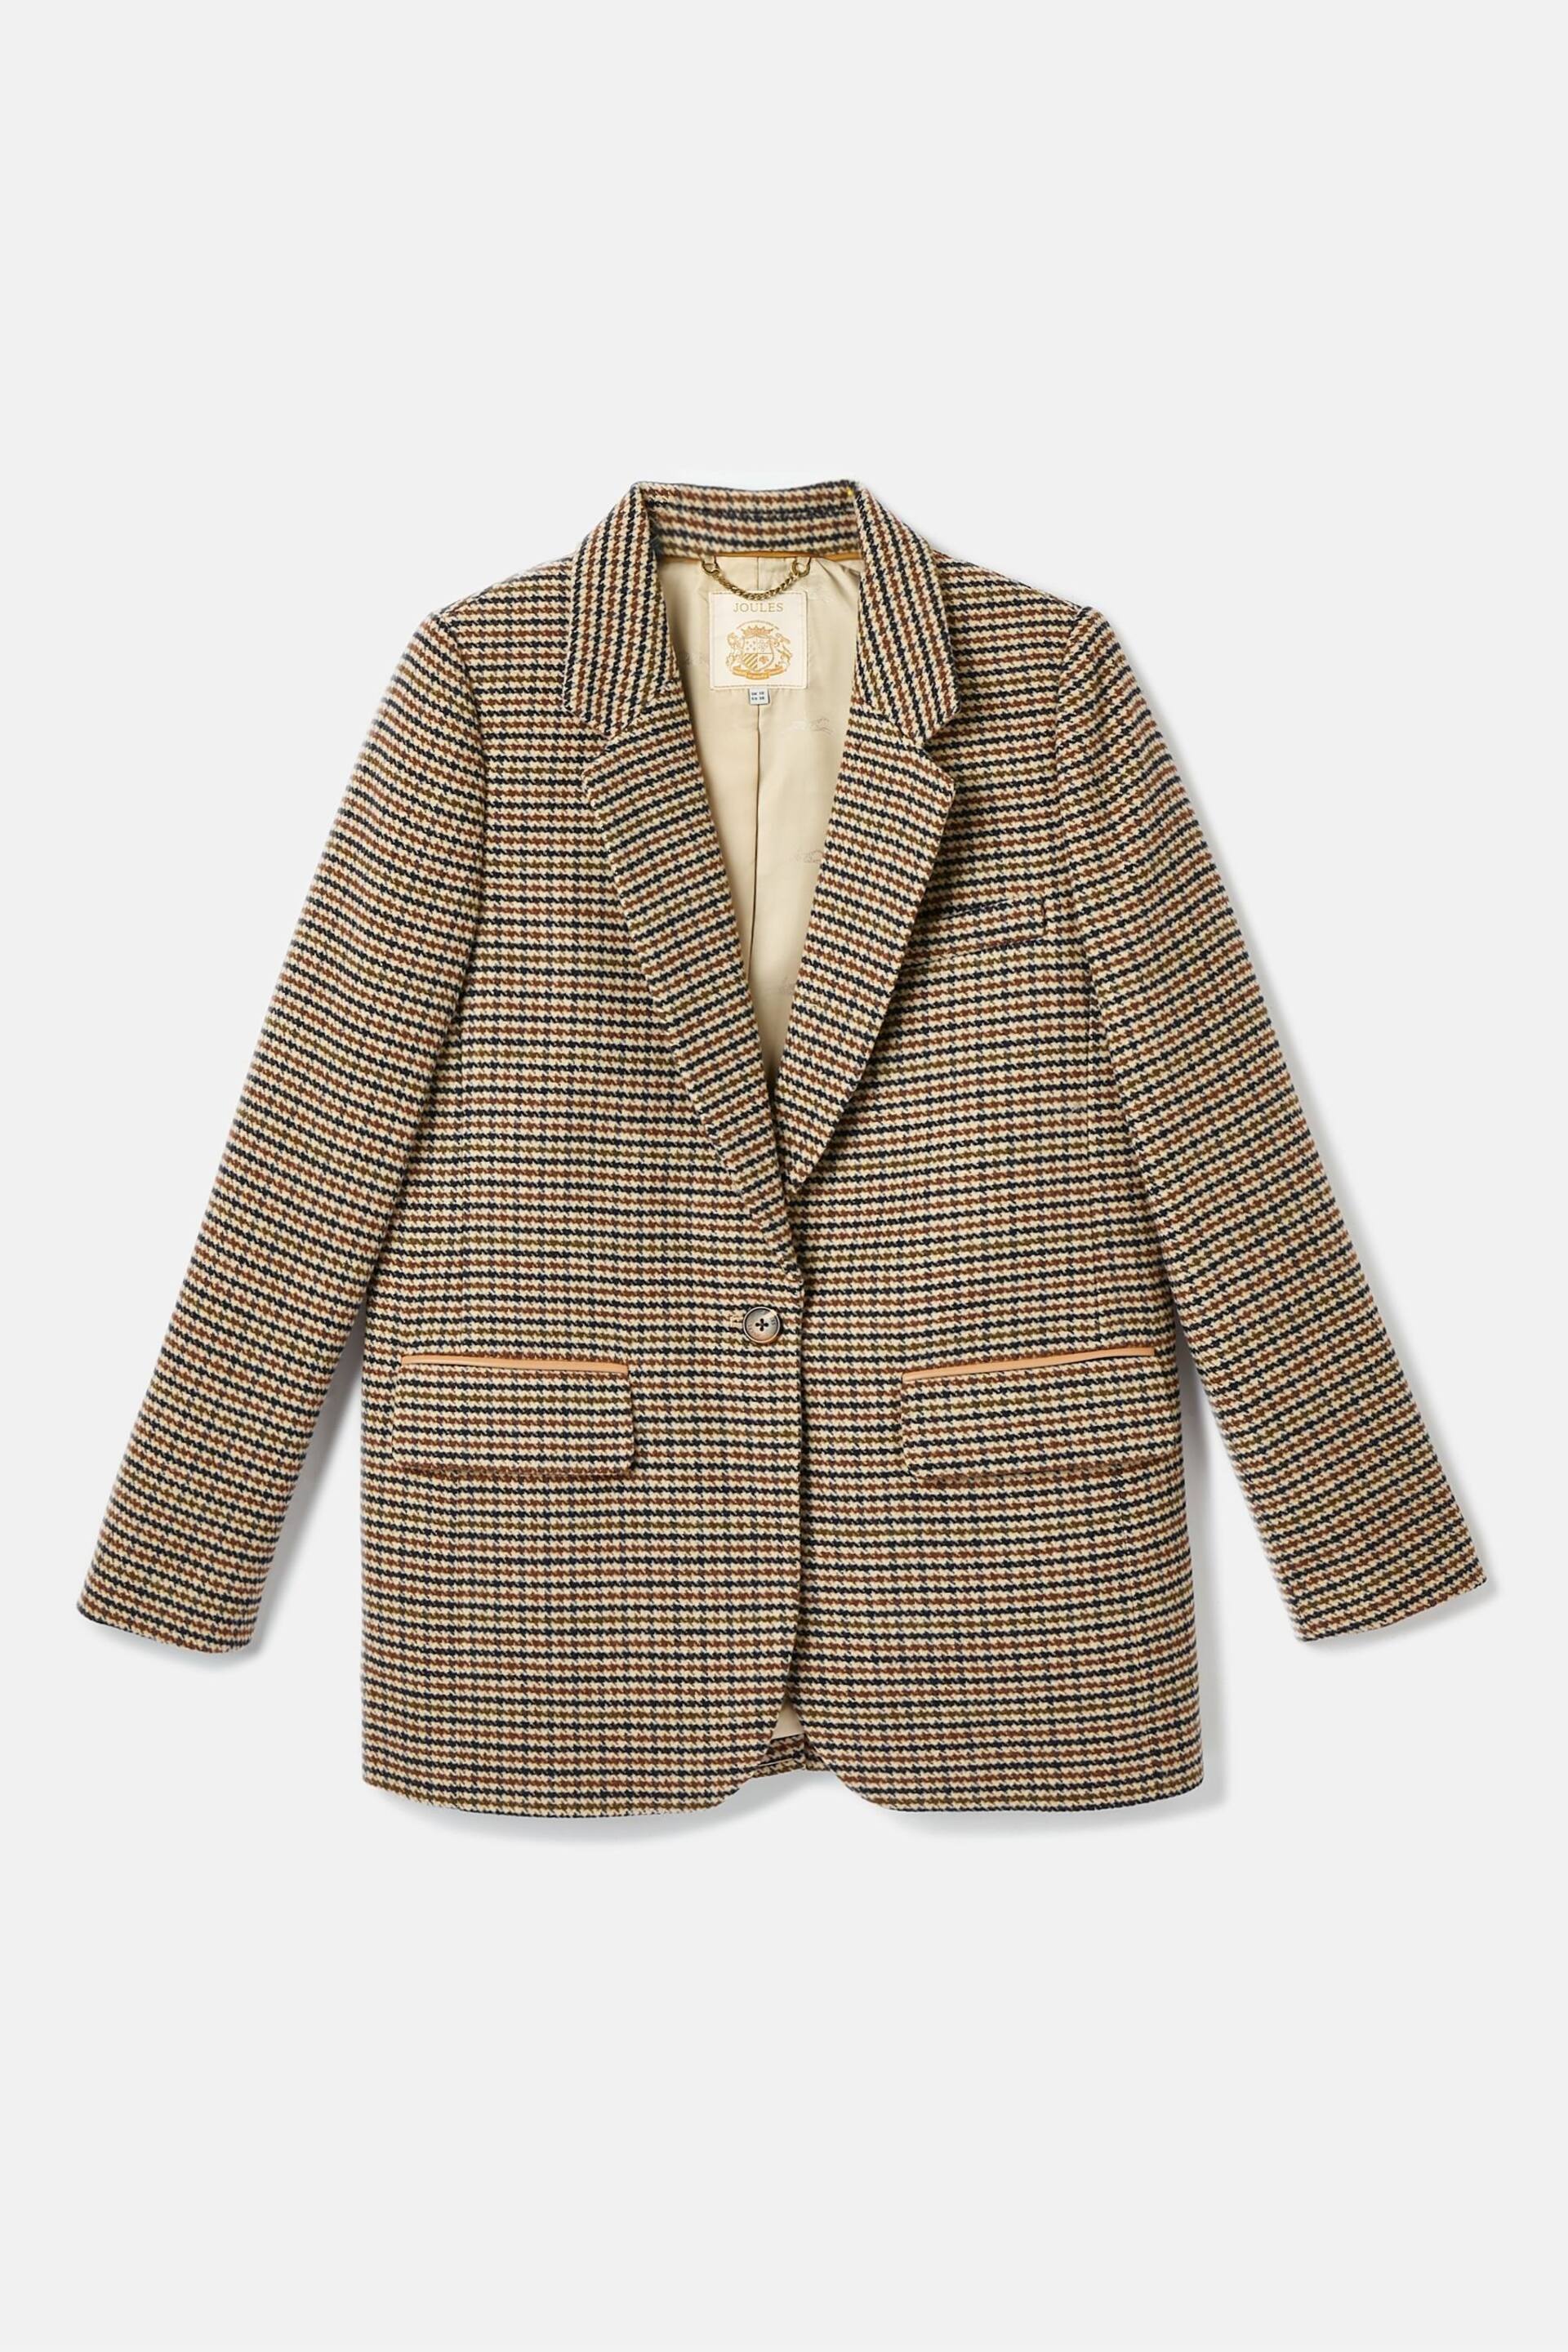 Joules Hackmore Brown Tweed Oversized Wool Blend Blazer - Image 11 of 11